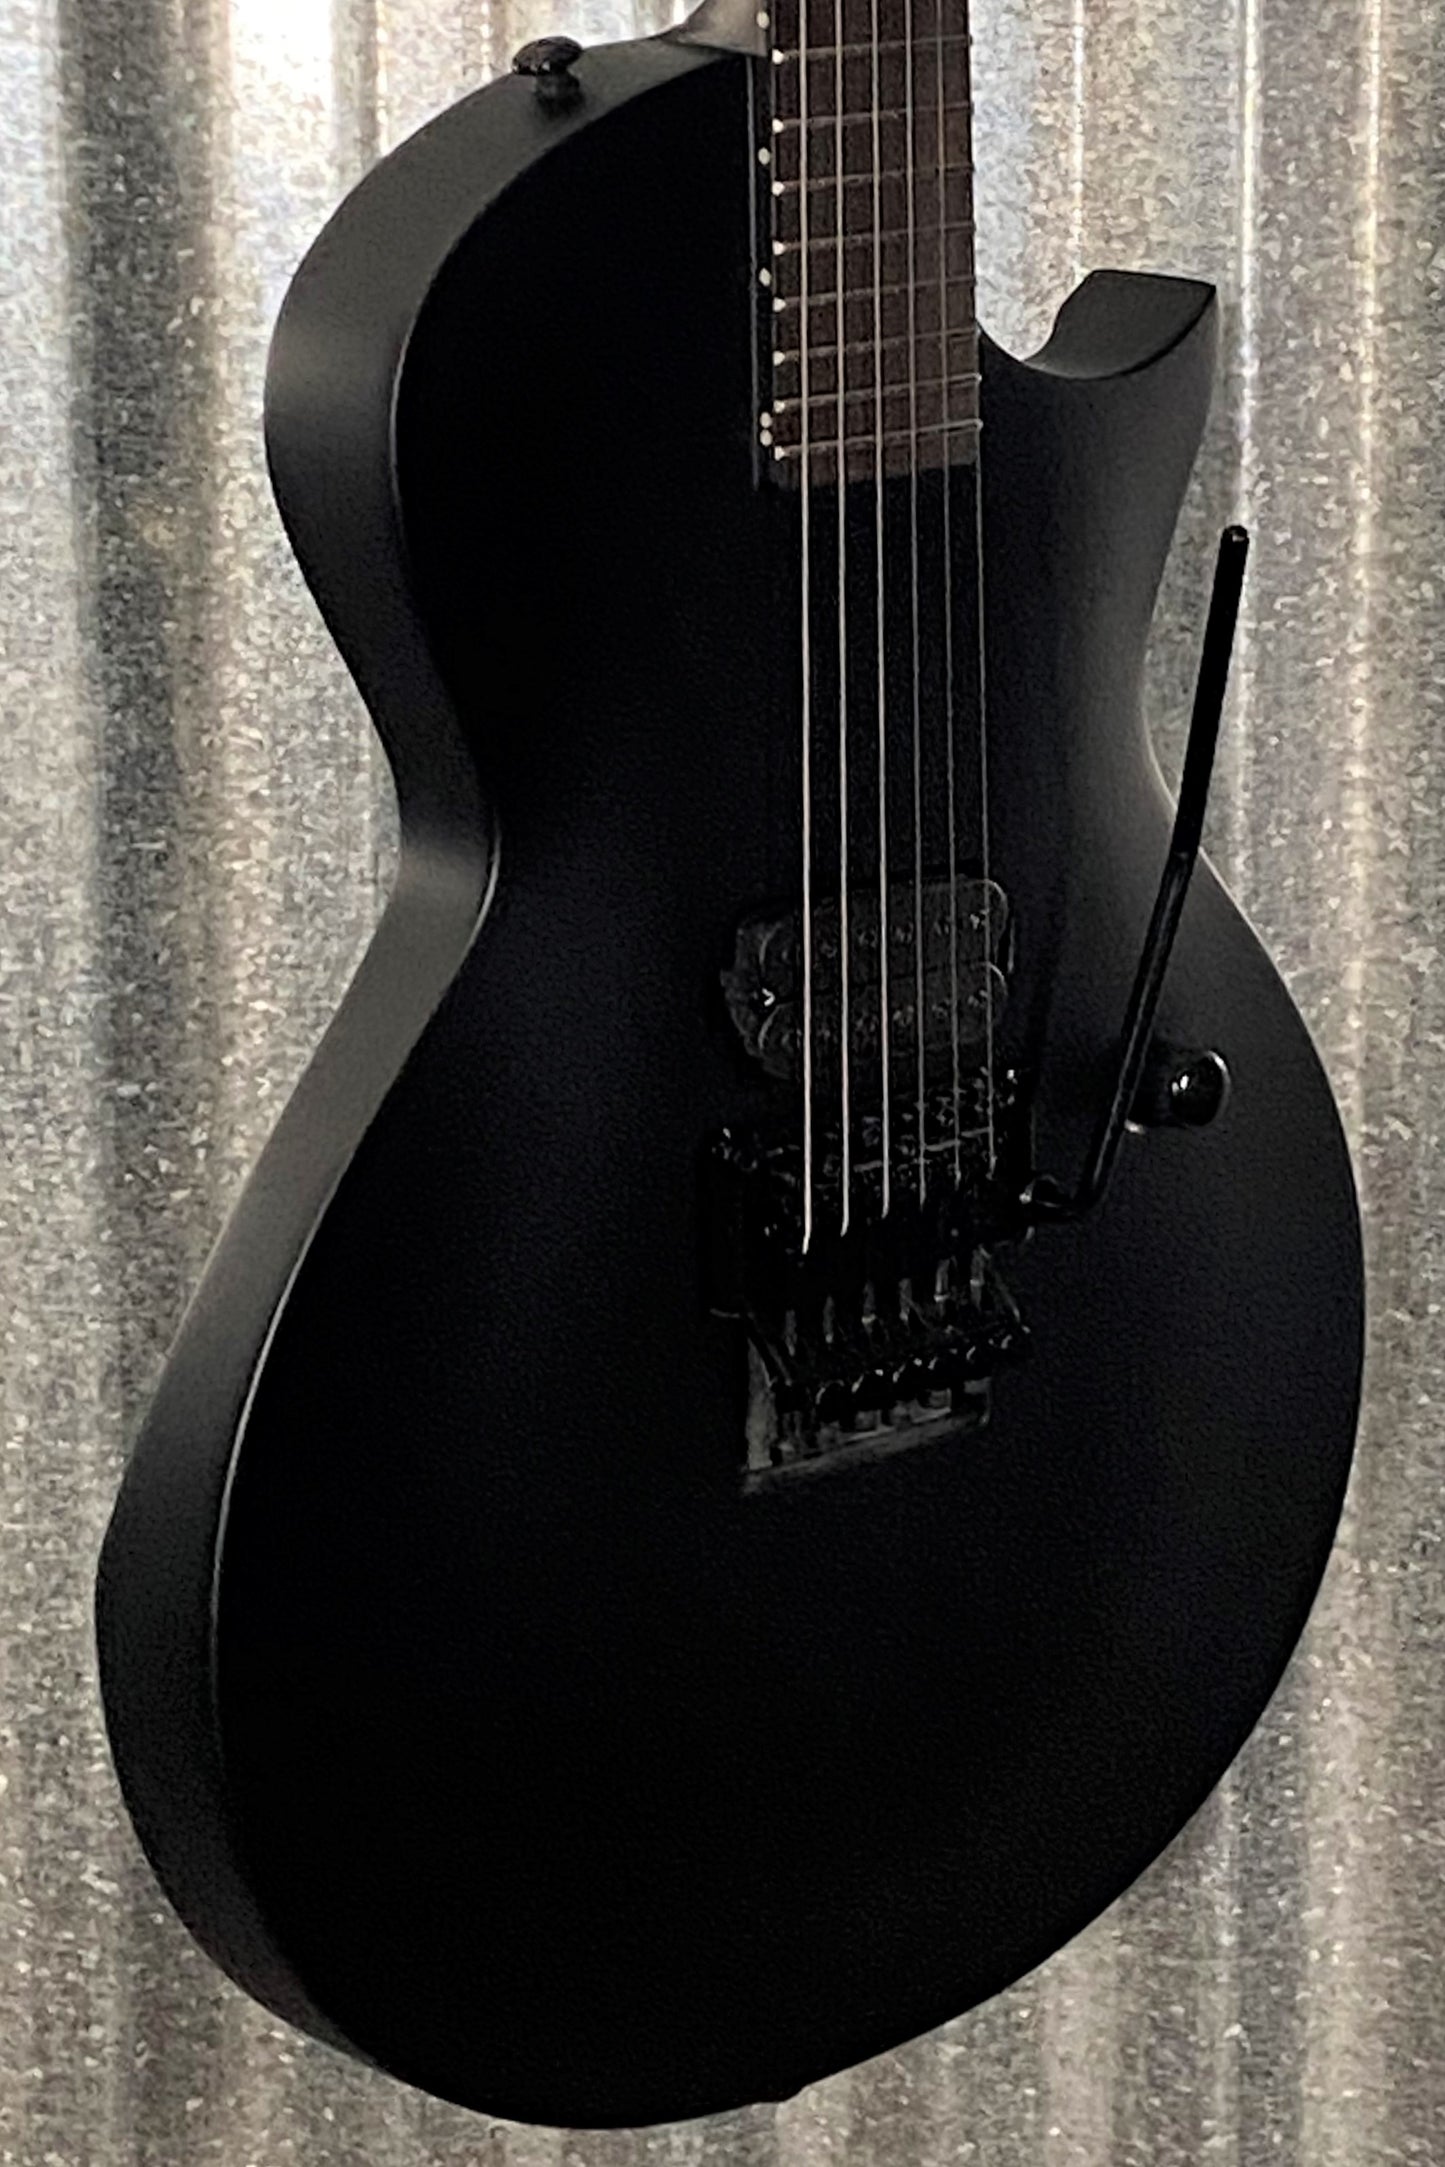 ESP LTD EC Black Metal Eclipse Seymour Duncan Black Satin Guitar LECBKMBLKS #0863 Used